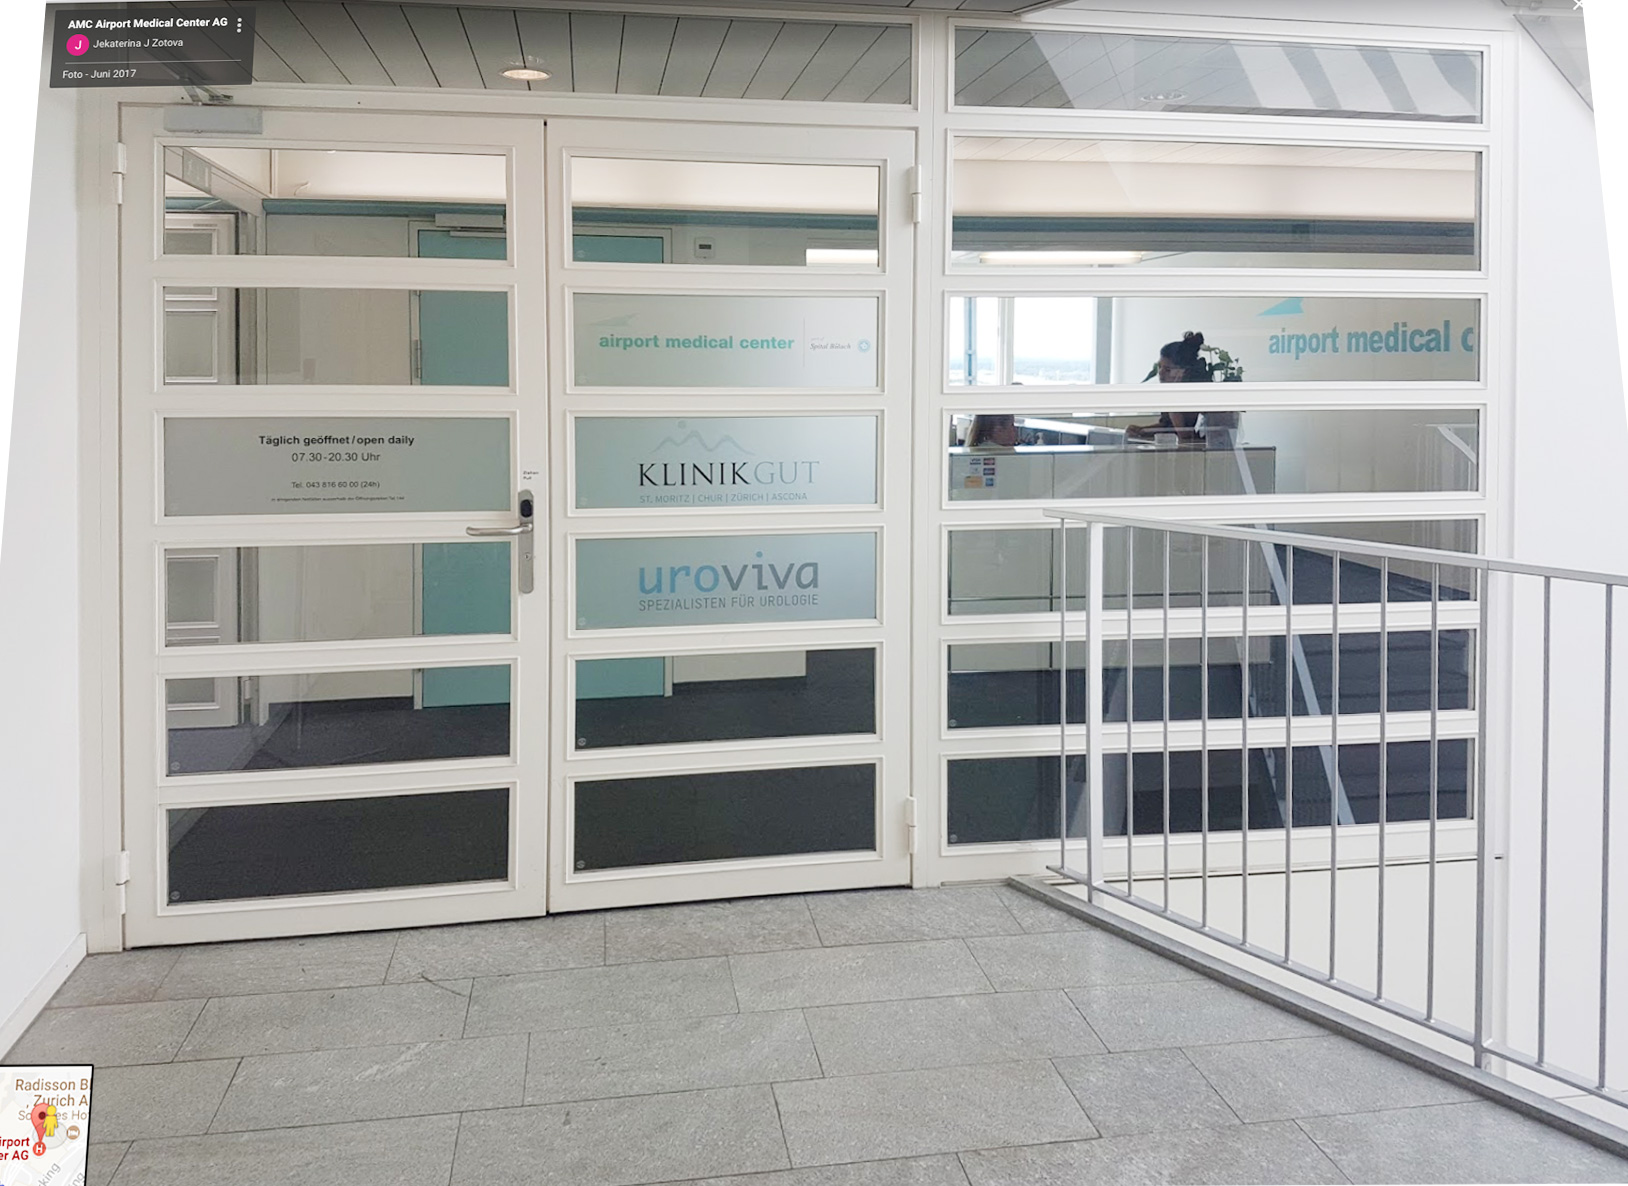 Urology Zurich Airport Medical Centre (Closing in August)